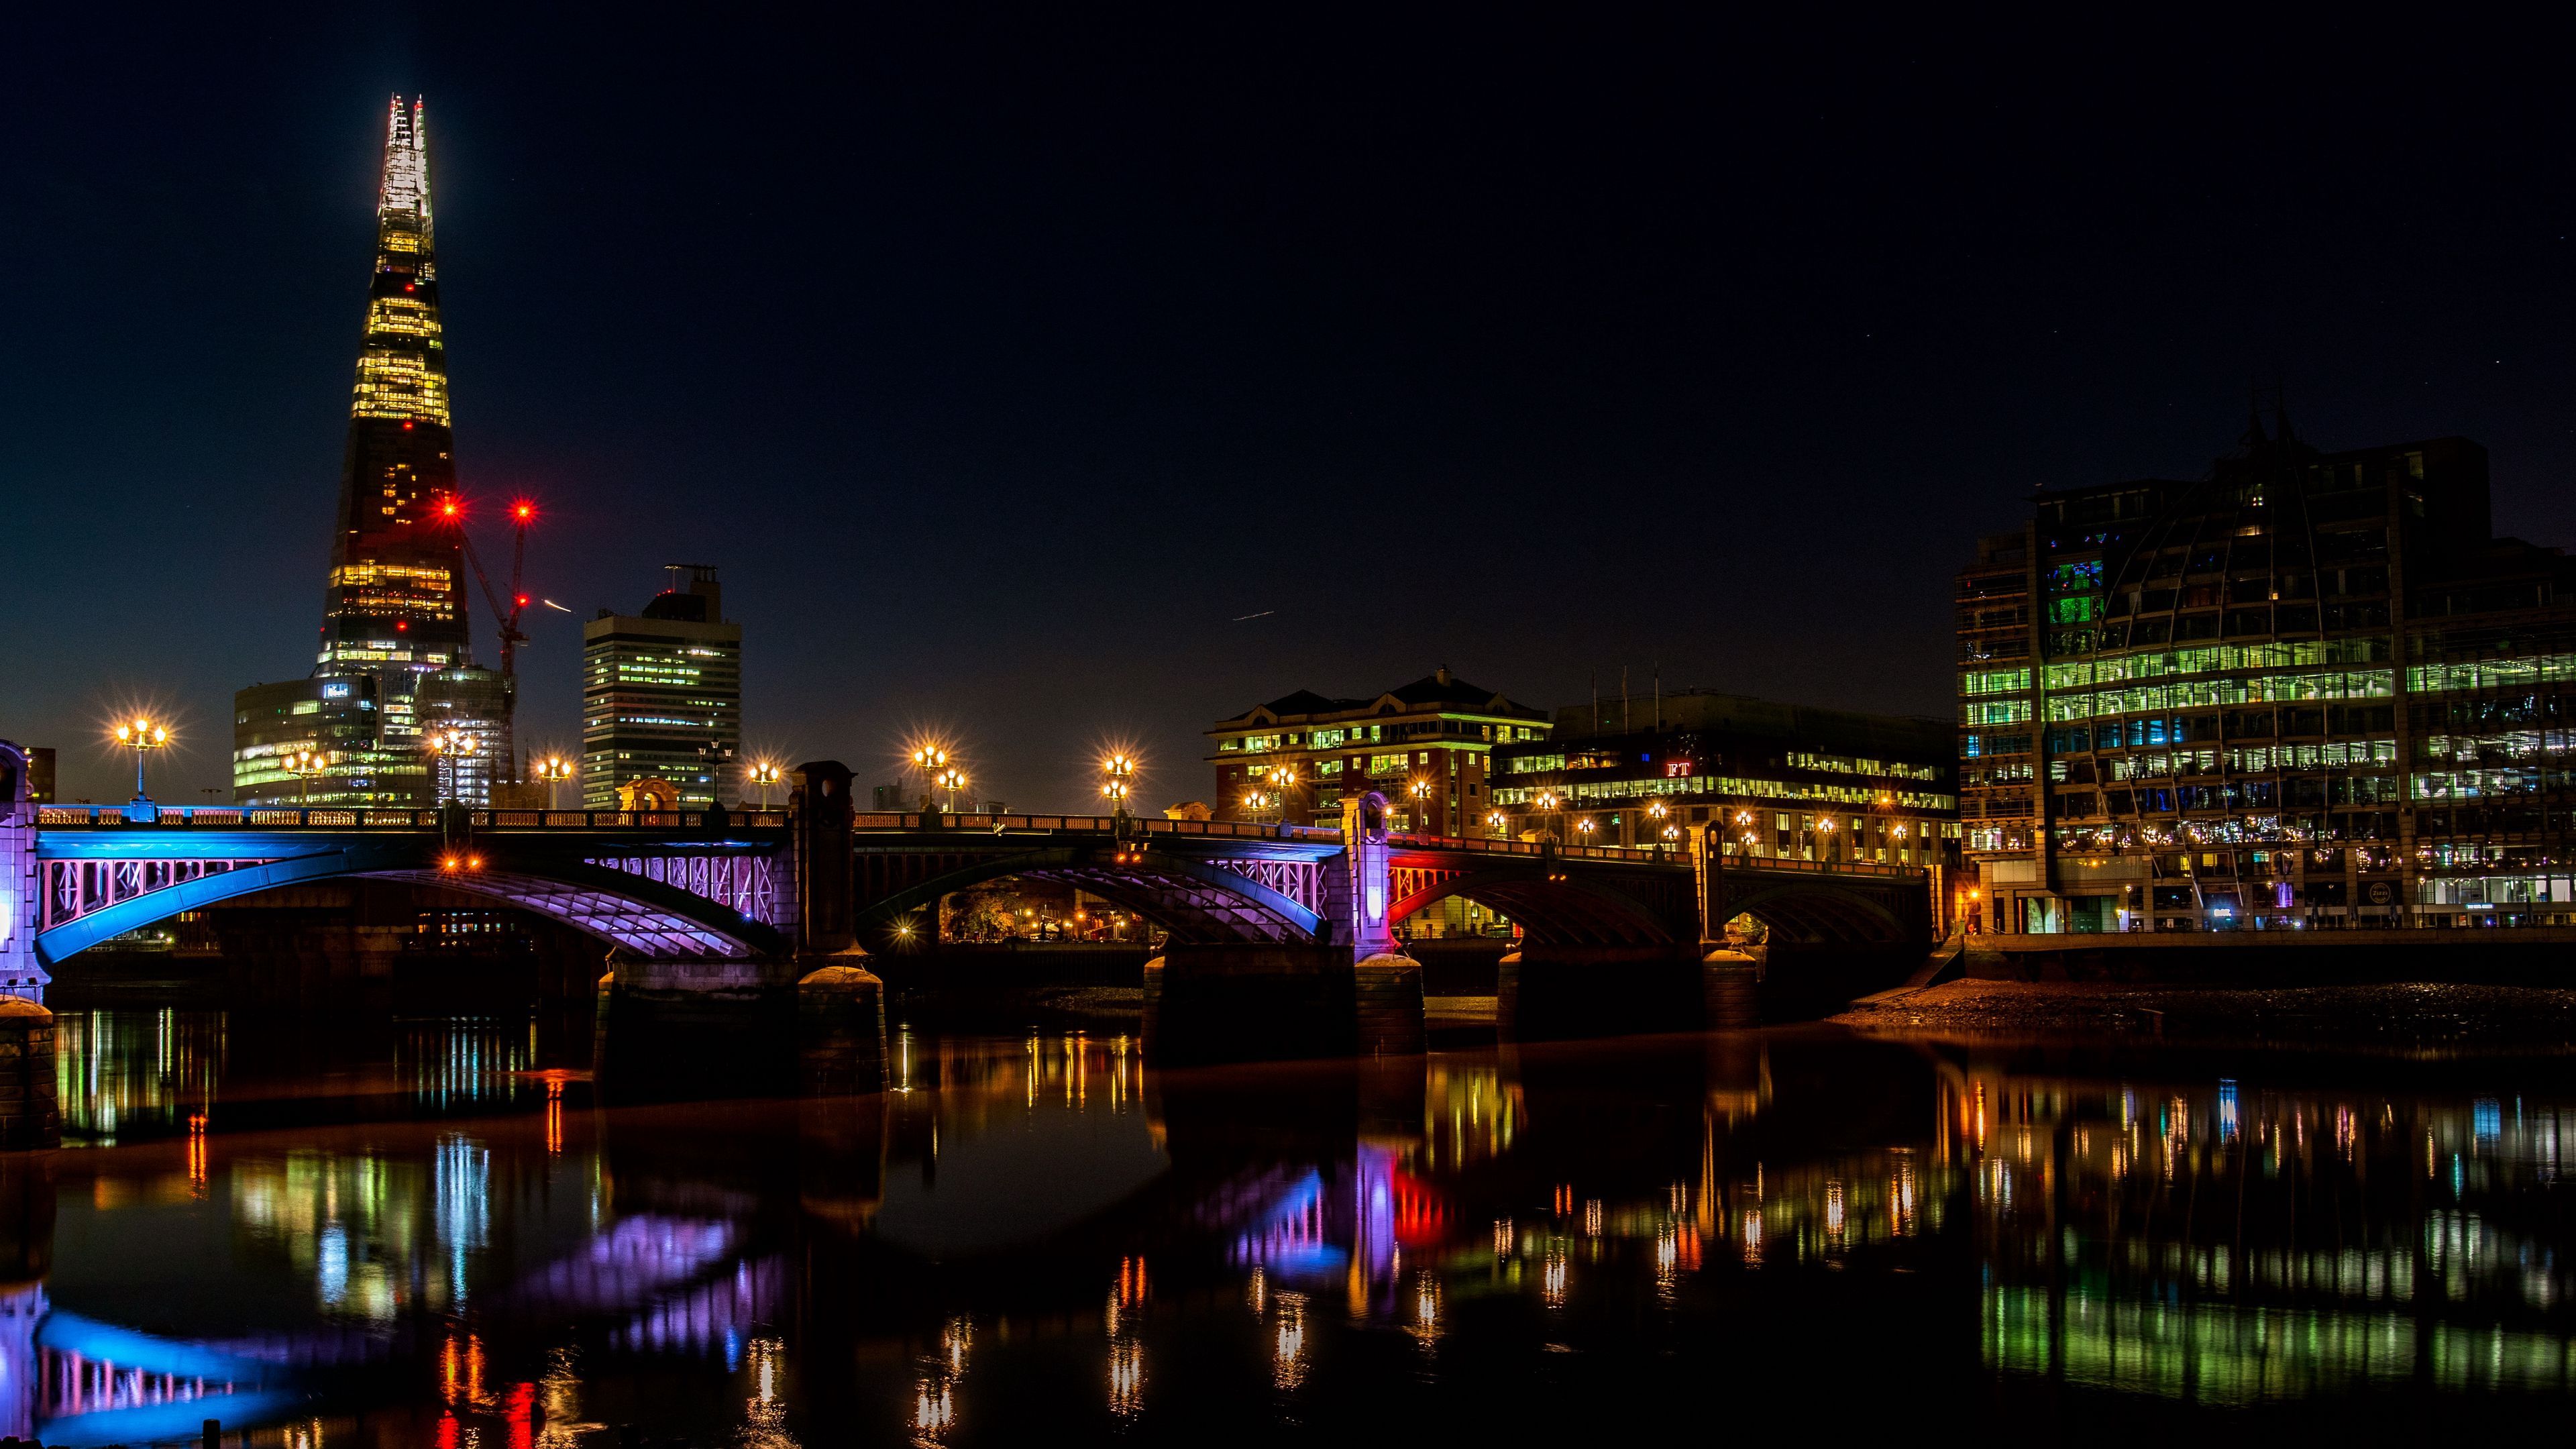 Download wallpaper 3840x2160 night city, city lights, bridge, river, thames, london, uk 4k uhd 16:9 HD background